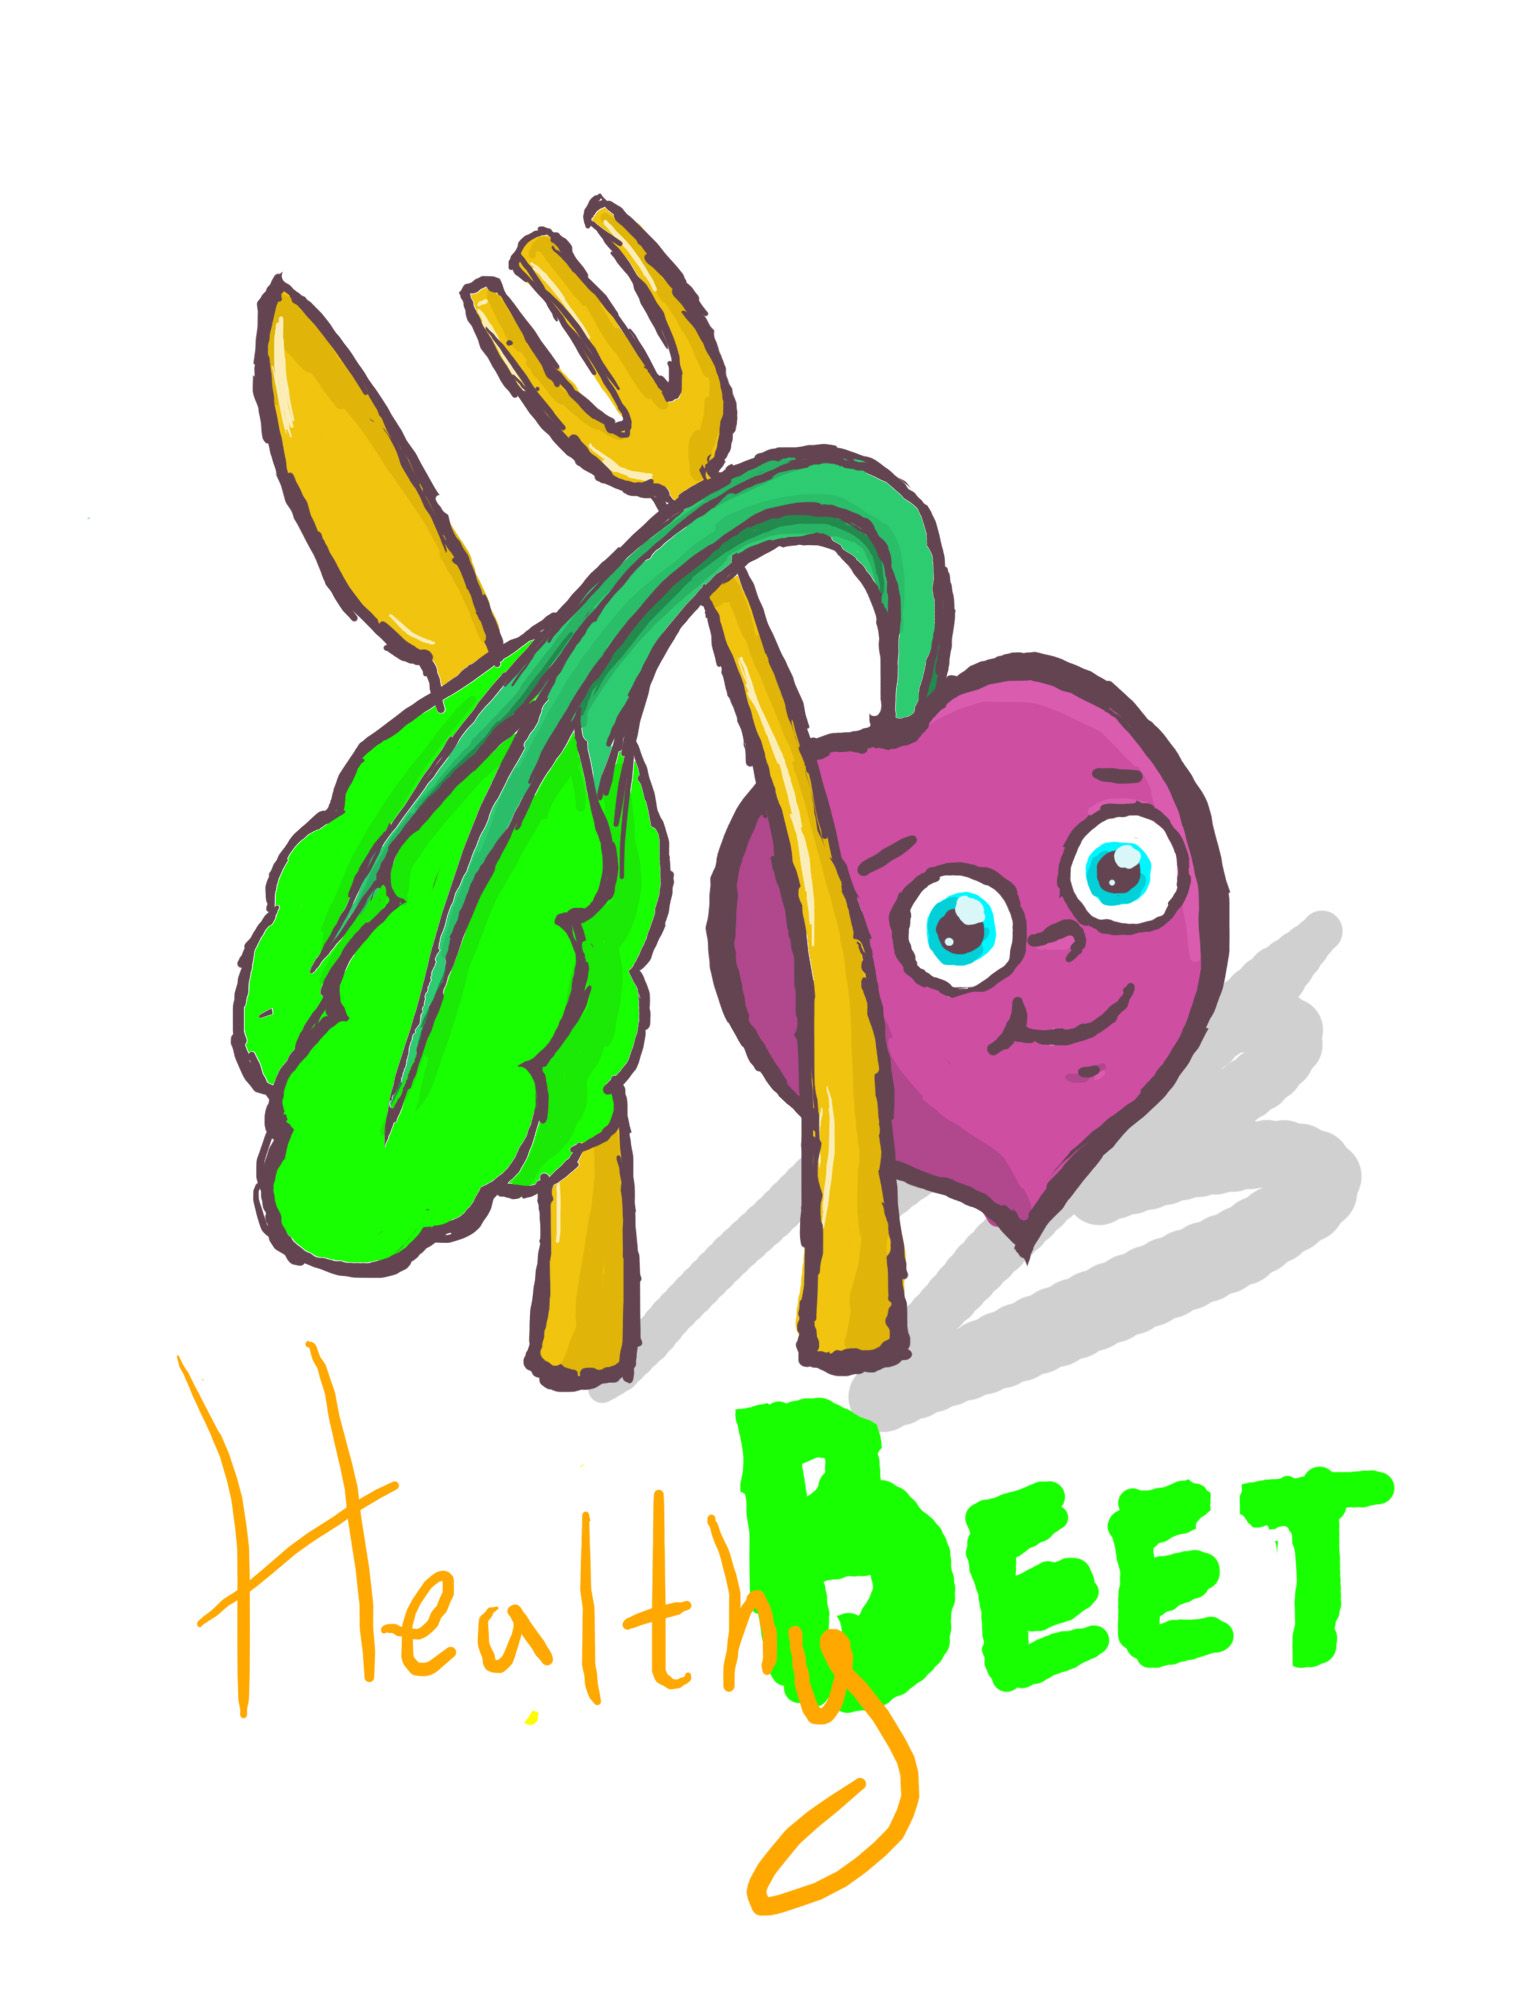 Healthy Bit или Healthy Beet - дизайнер hedgehog